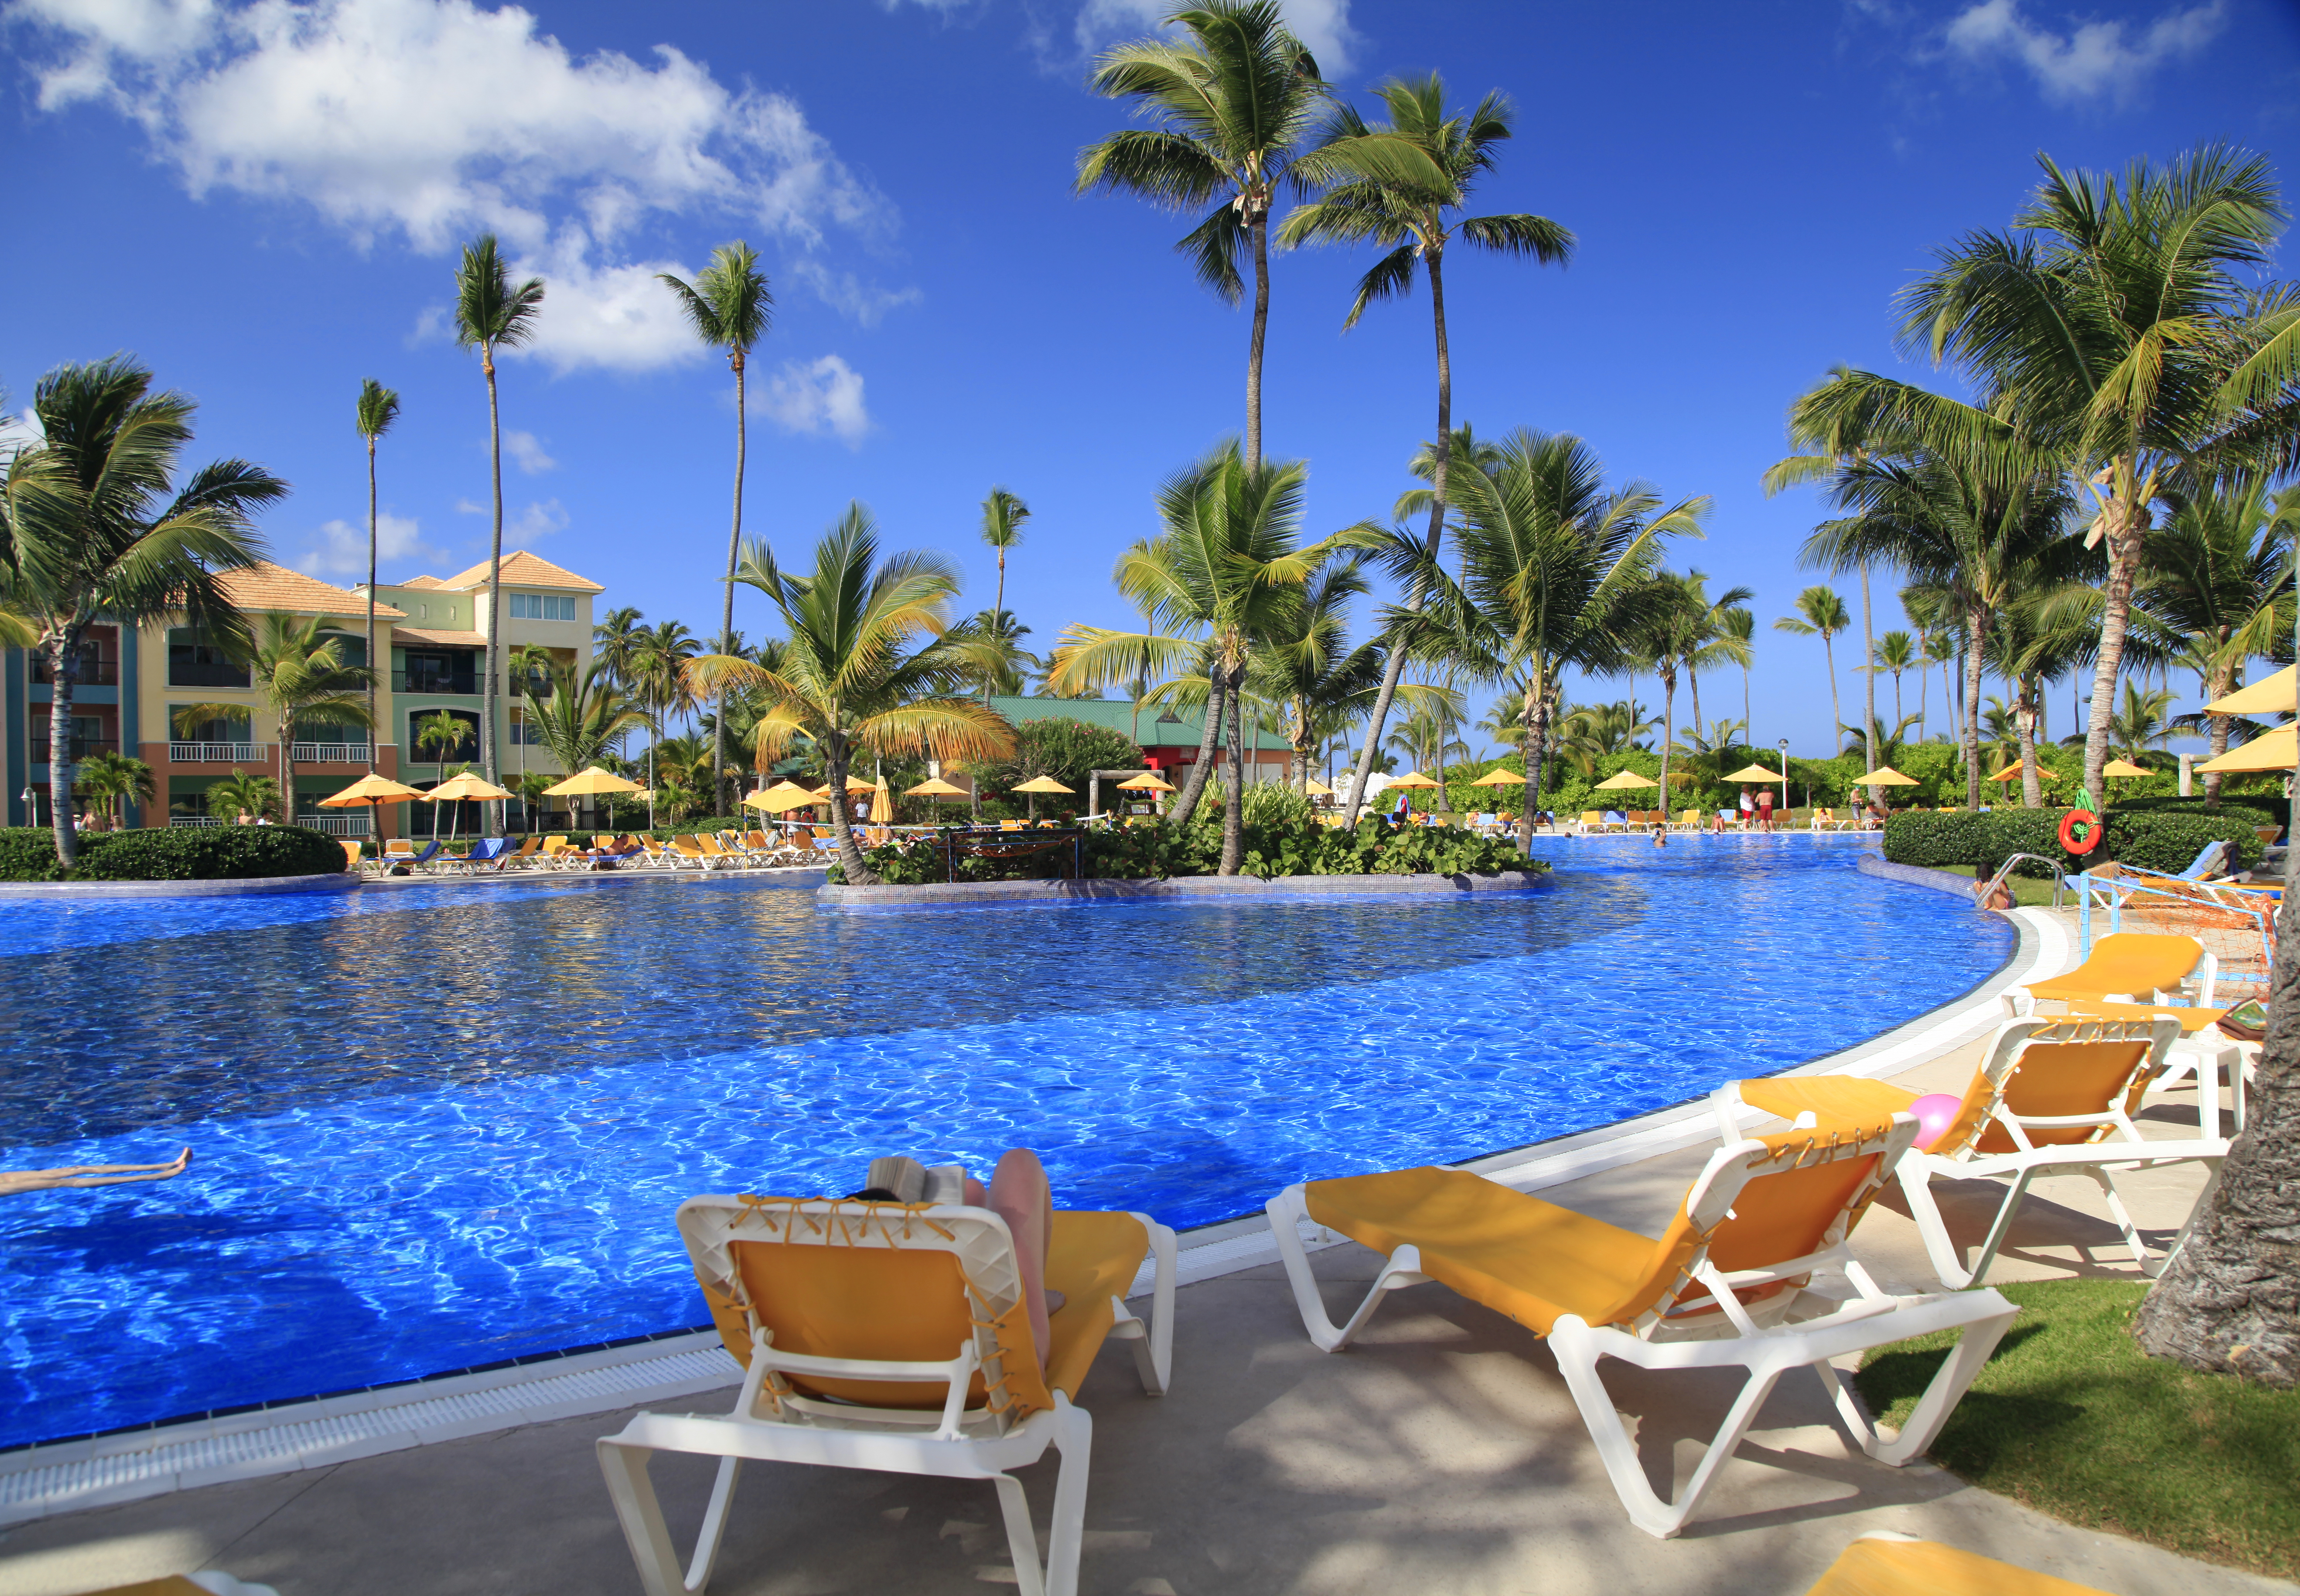 Resort Commercial Pool